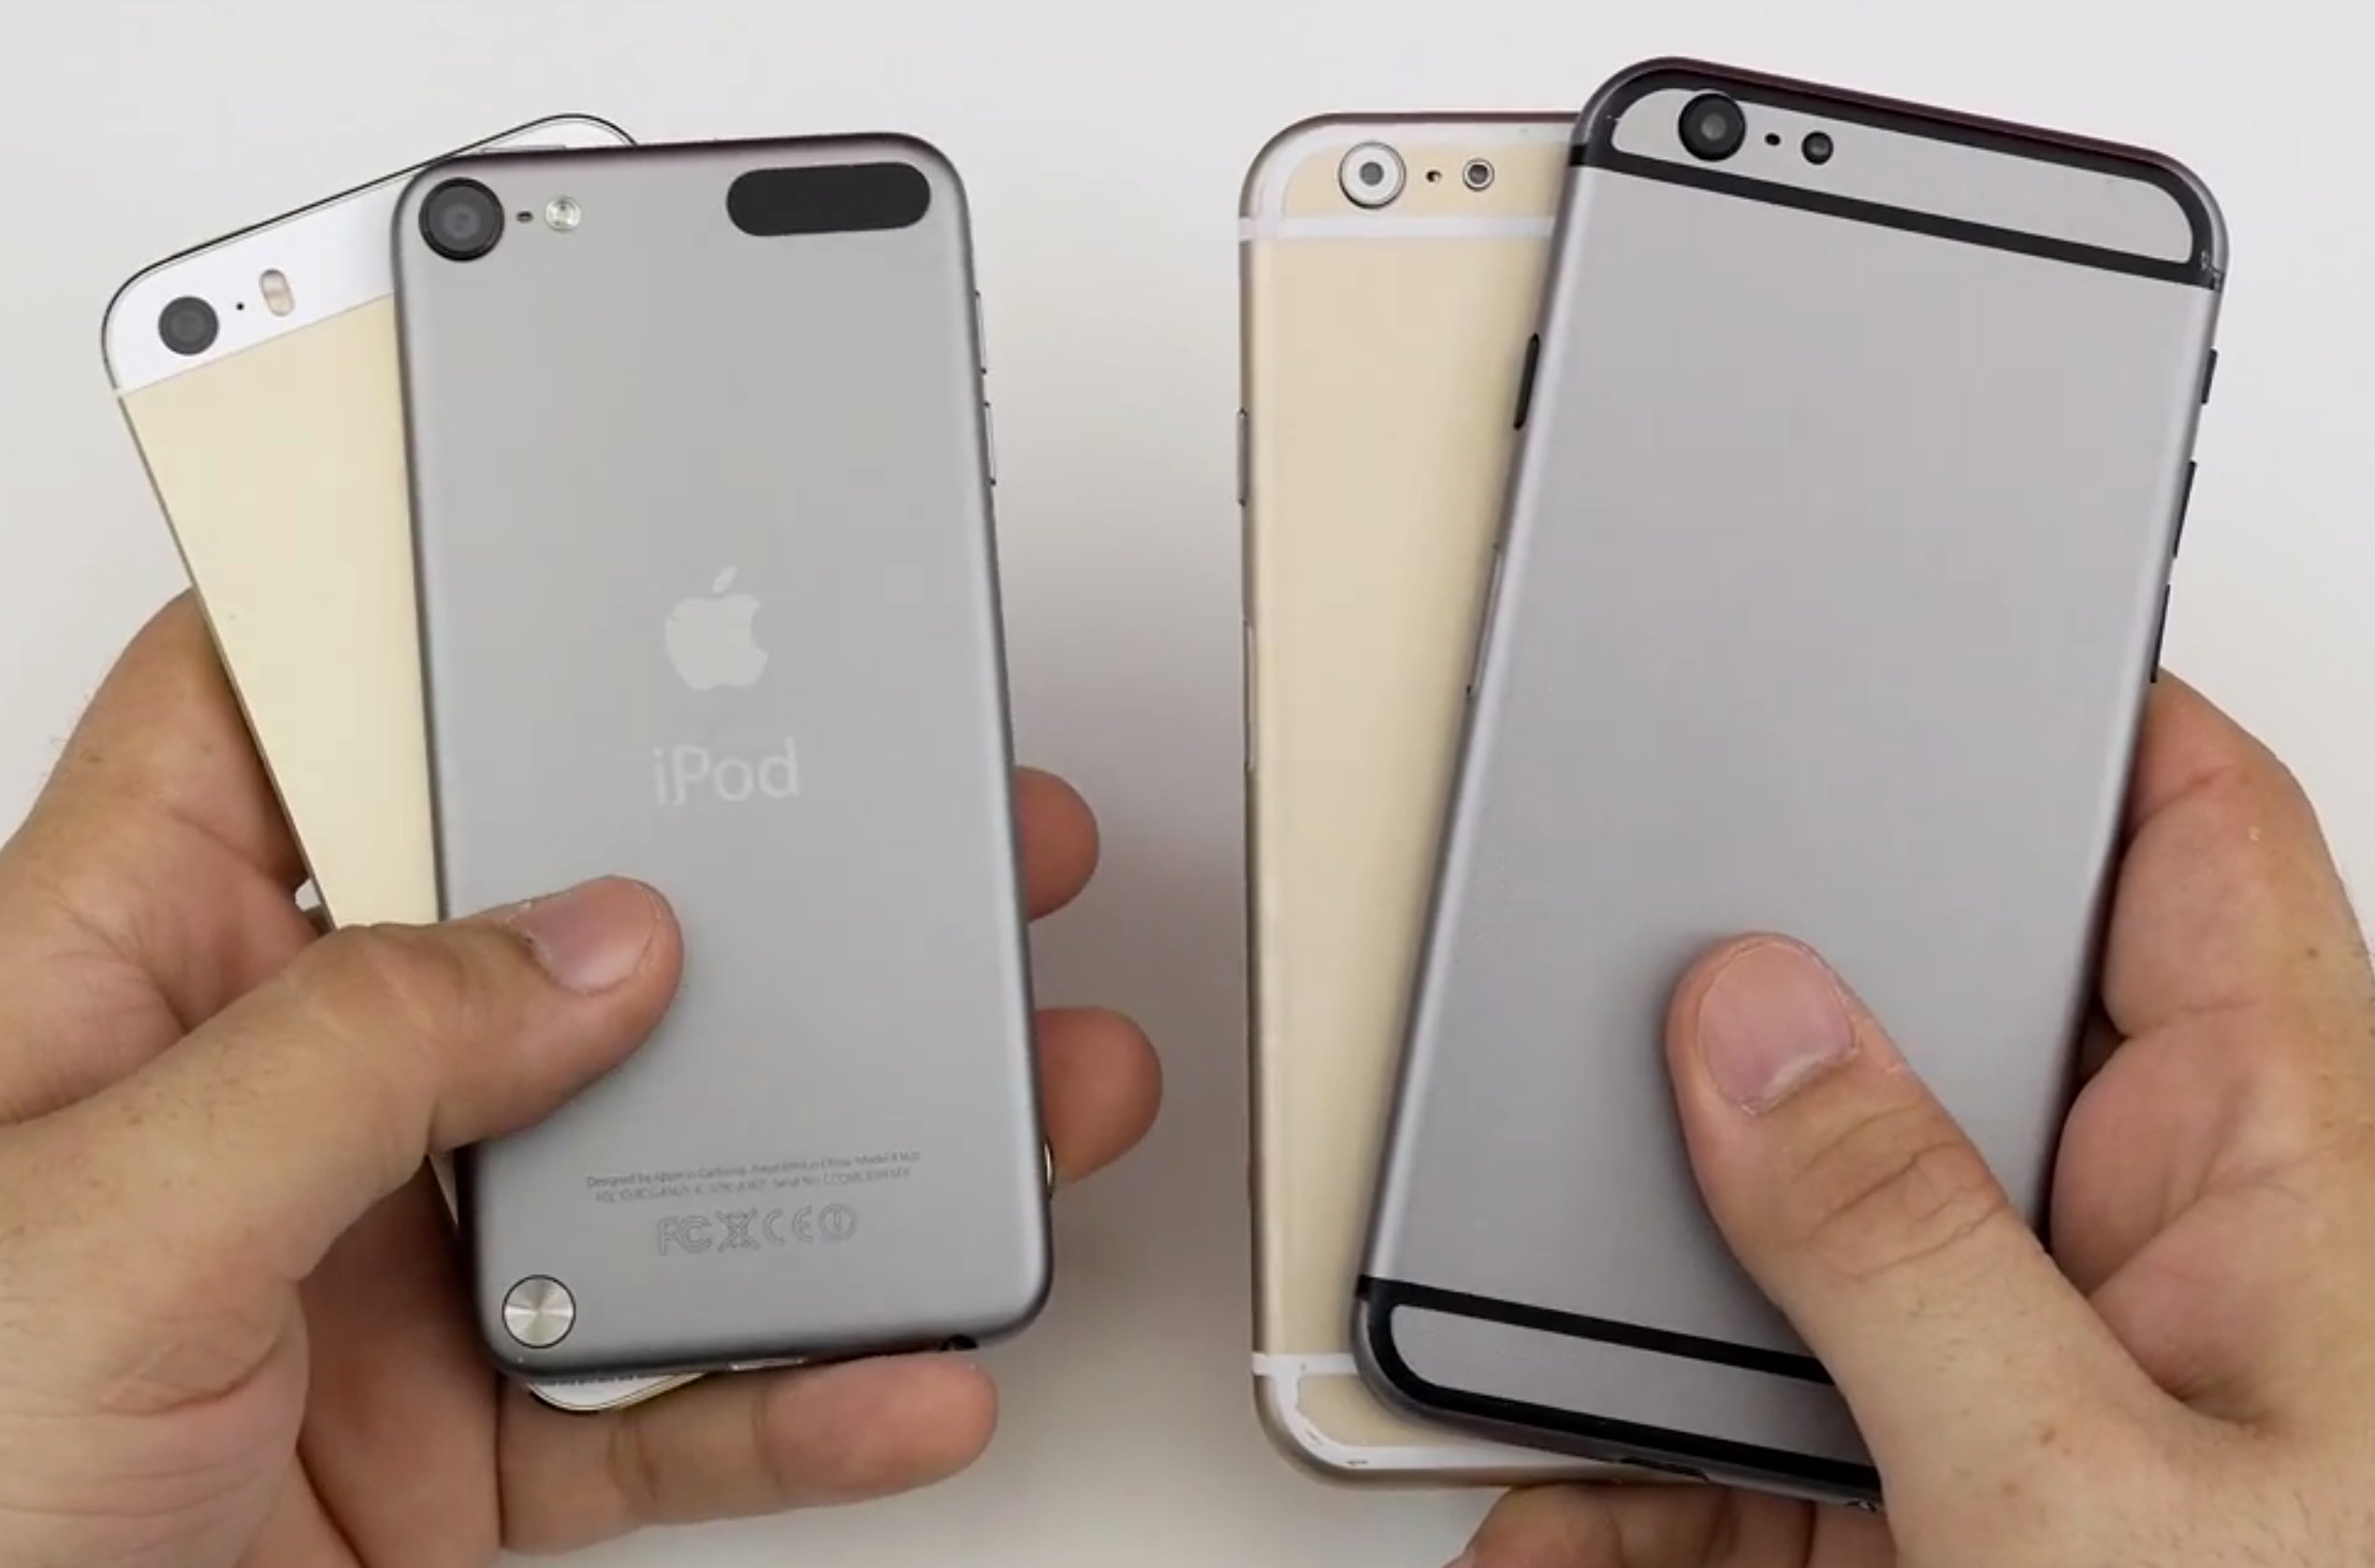 Vergleich: iPhone 6, iPhone 5s vs. Banane, gold vs. spacegrau 8